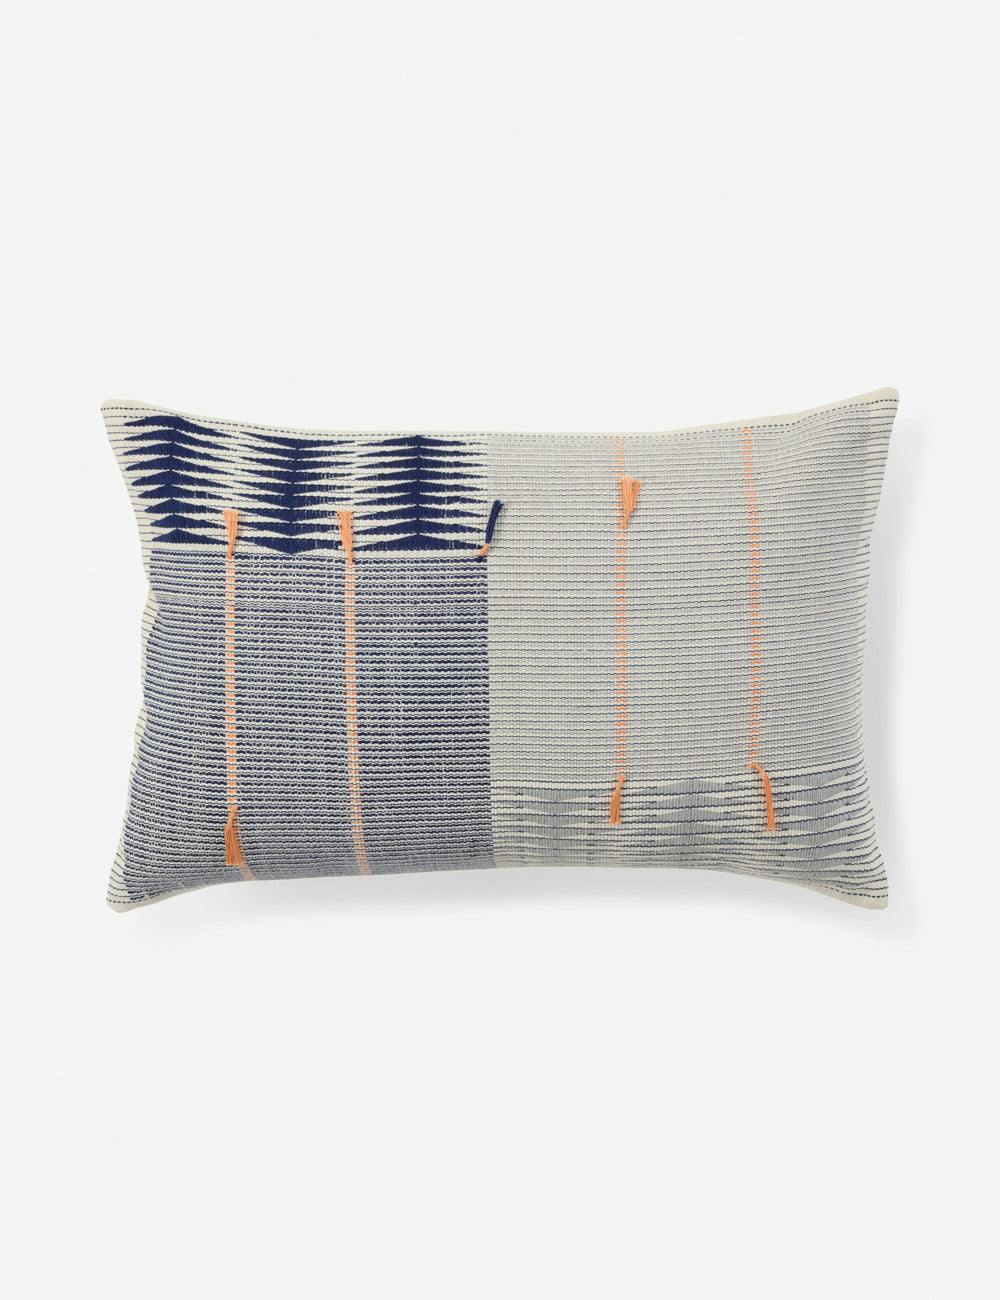 Nagaland Artisan Embroidered Striped Throw Pillow - Navy/Silver 16" x 24"